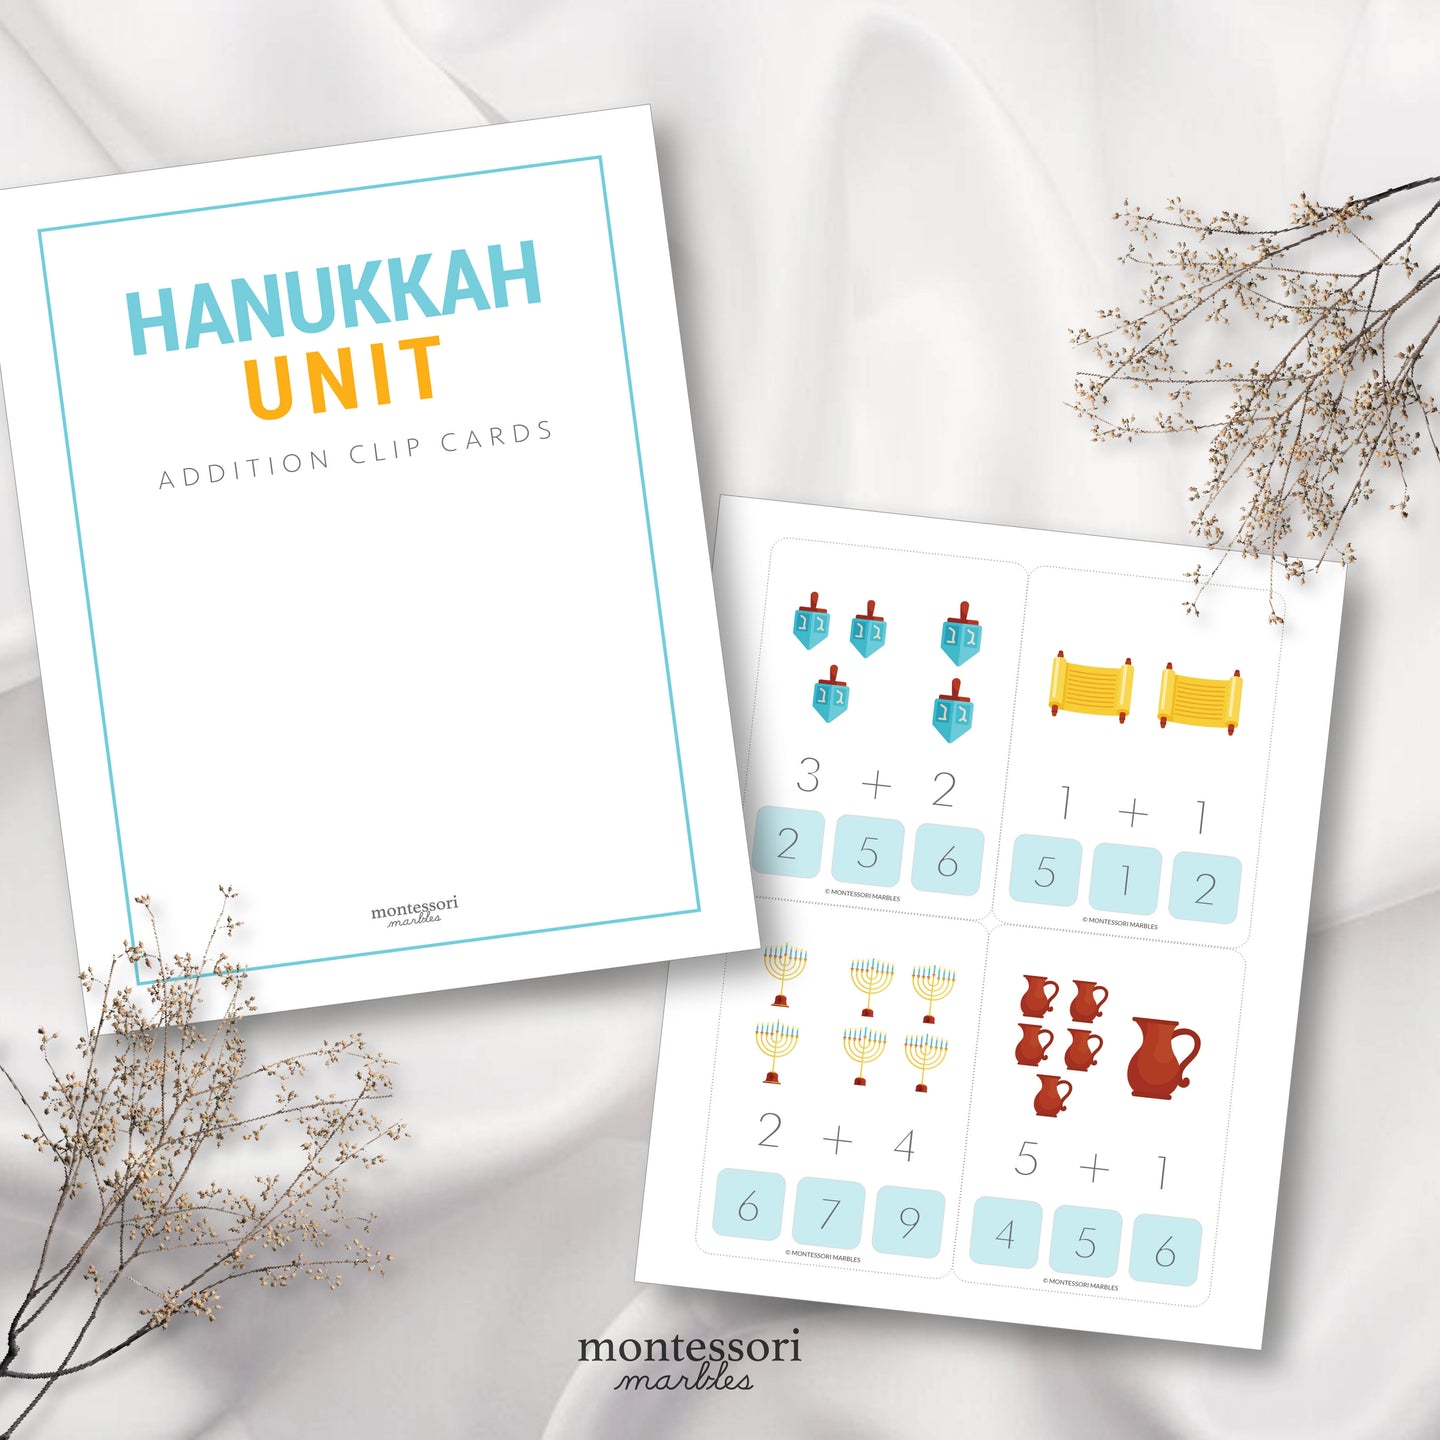 Hanukkah Addition Clip Cards